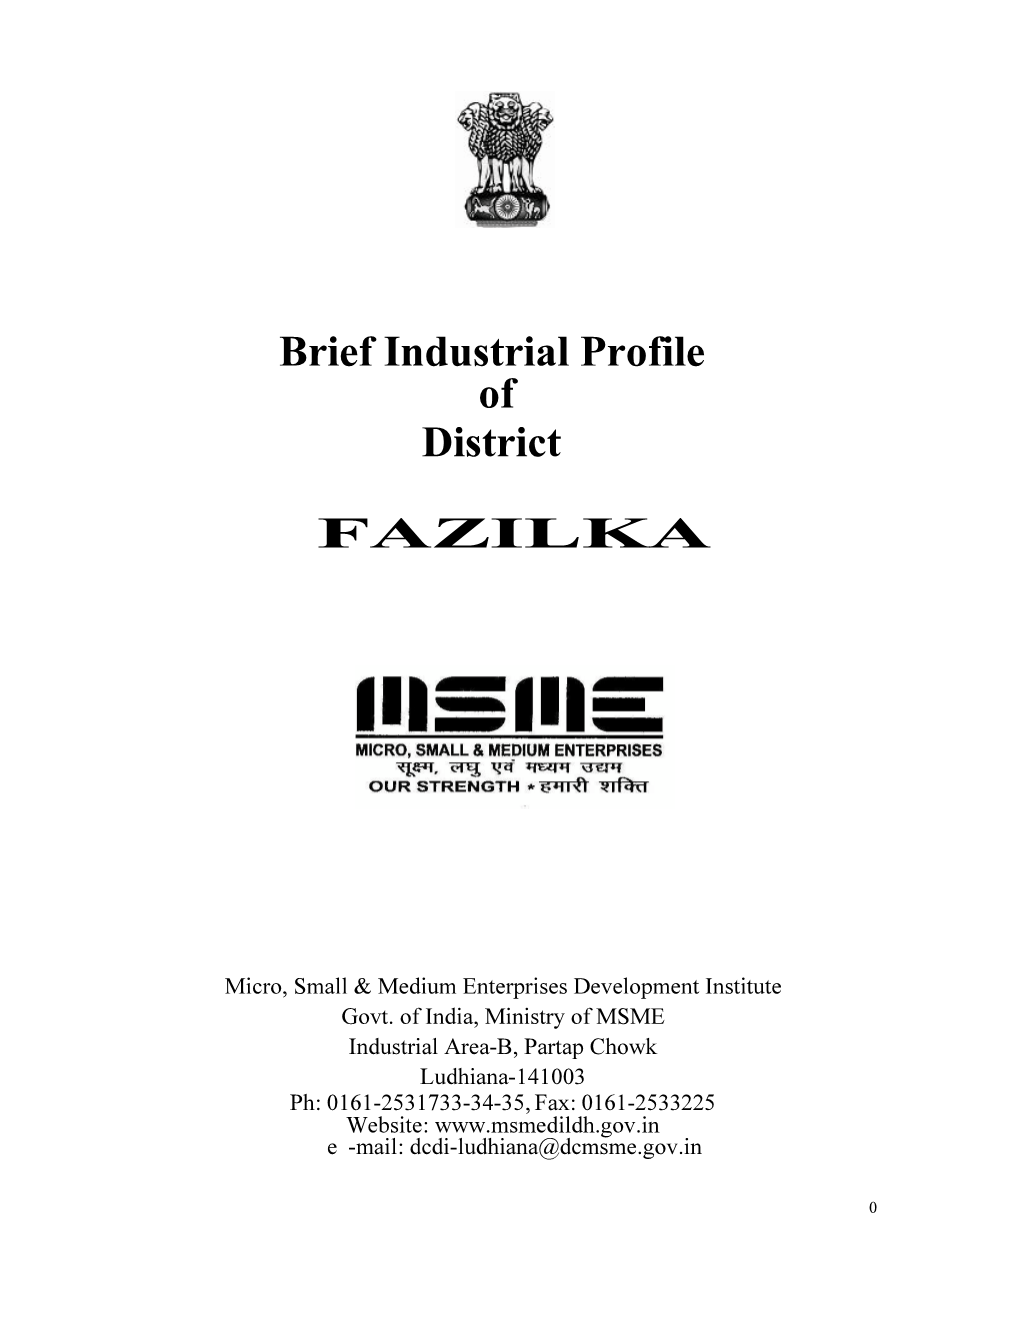 Brief Industrial Profile of District FAZILKA